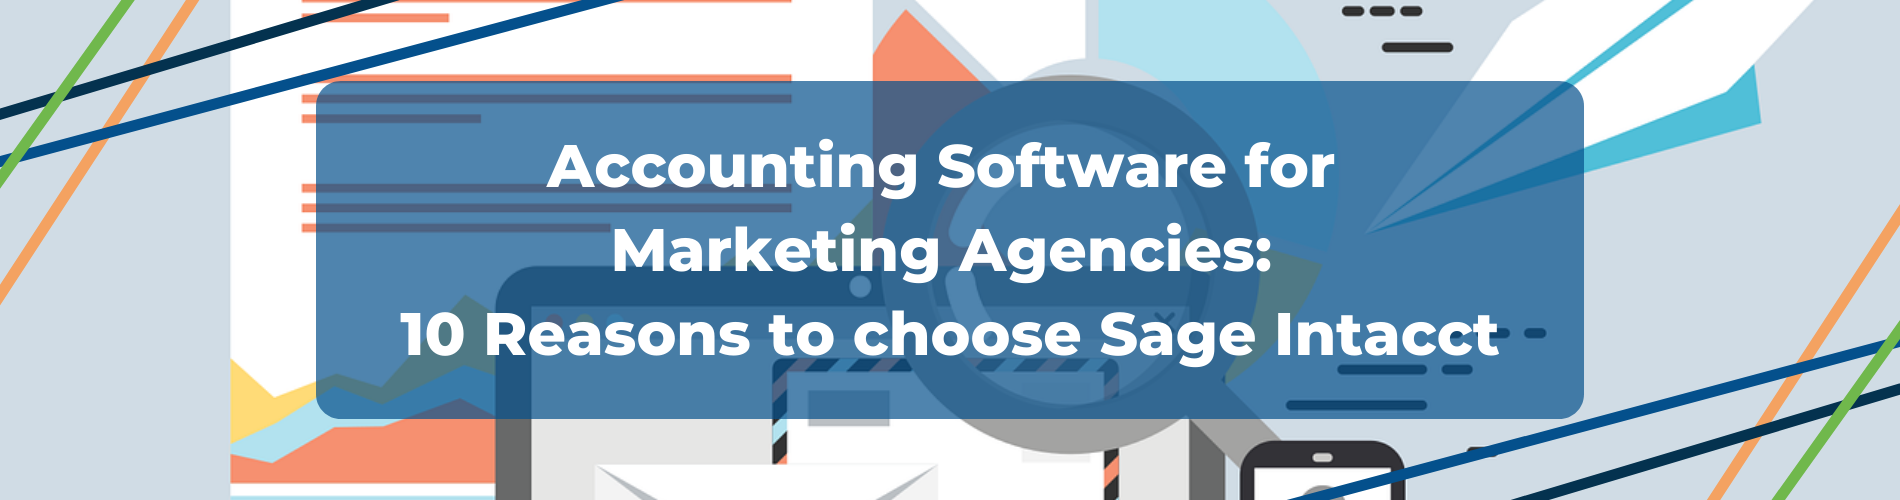 Accounting software for marketing agencies: reasons to choose Sage Intacct